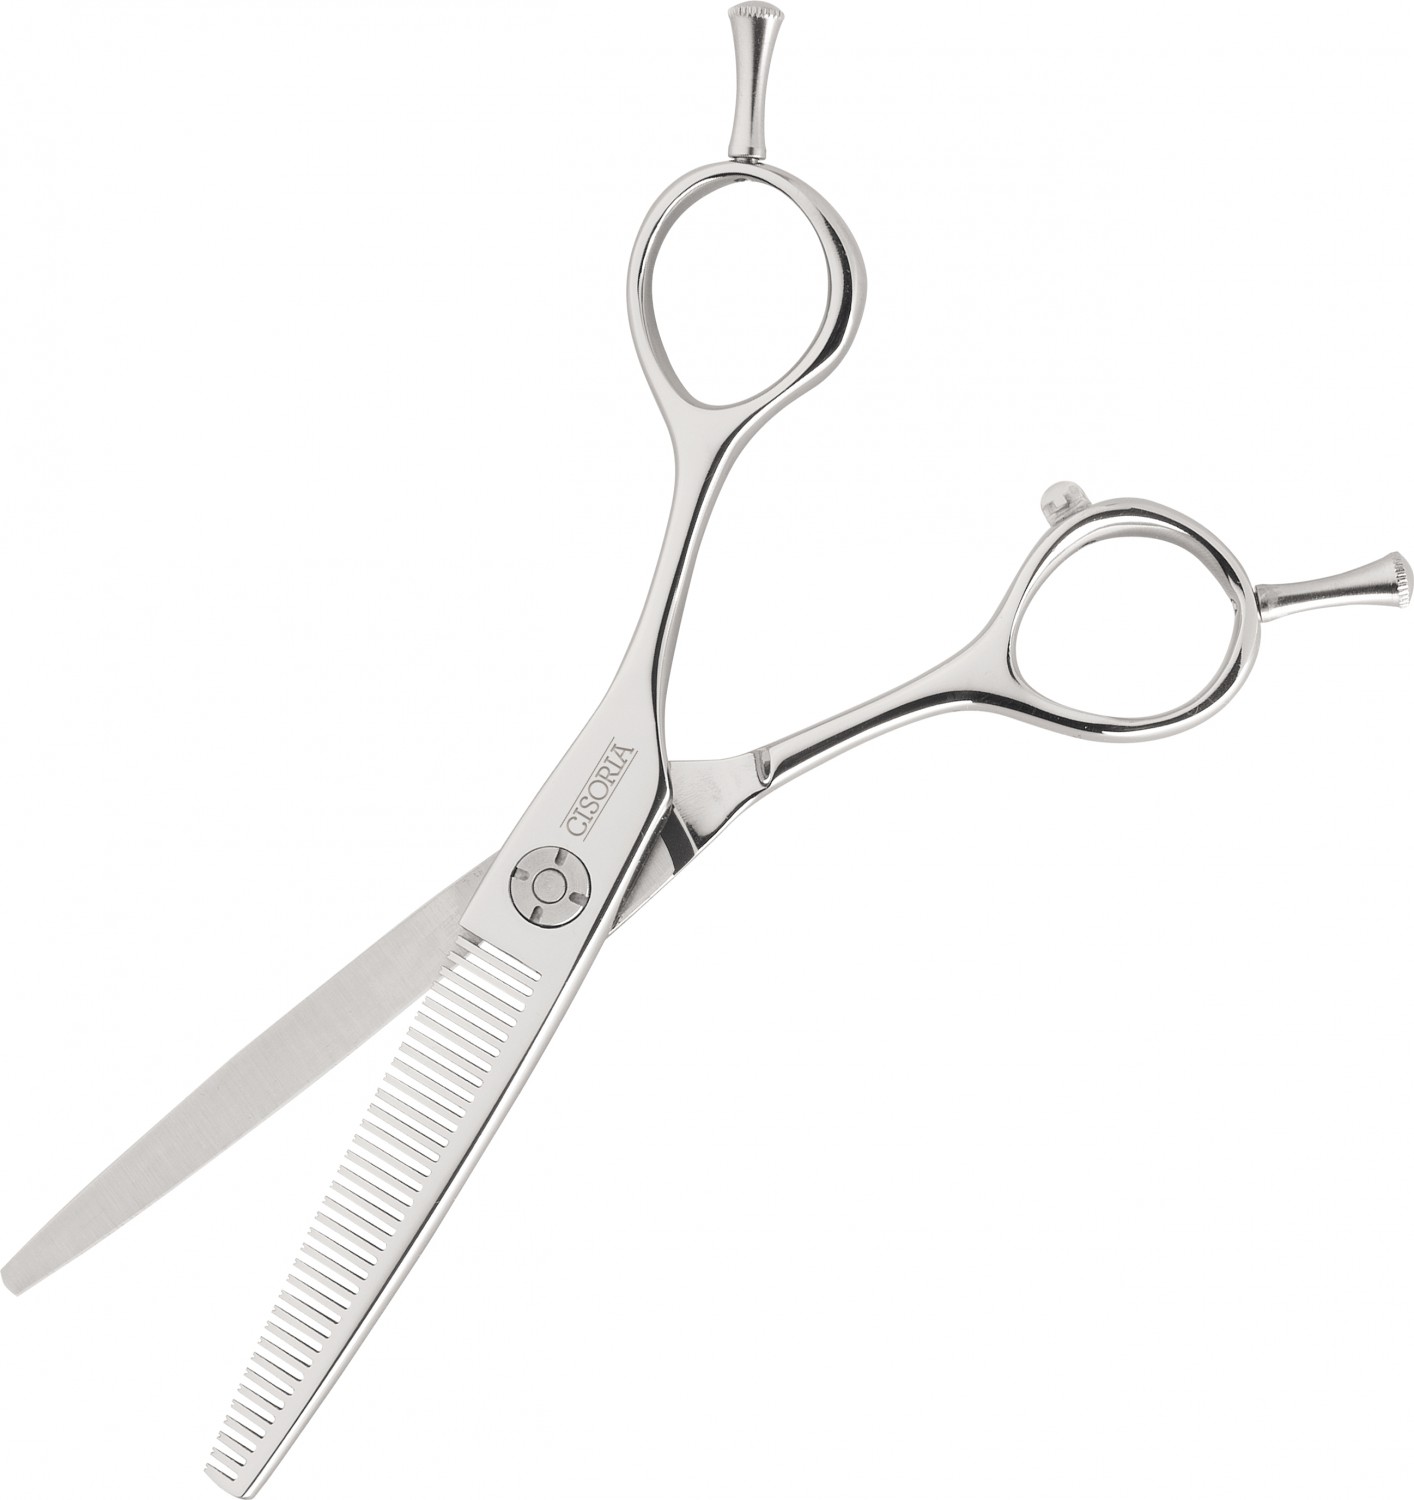  Cisoria Straight Thinning Scissors 6" SV35 by Sibel 